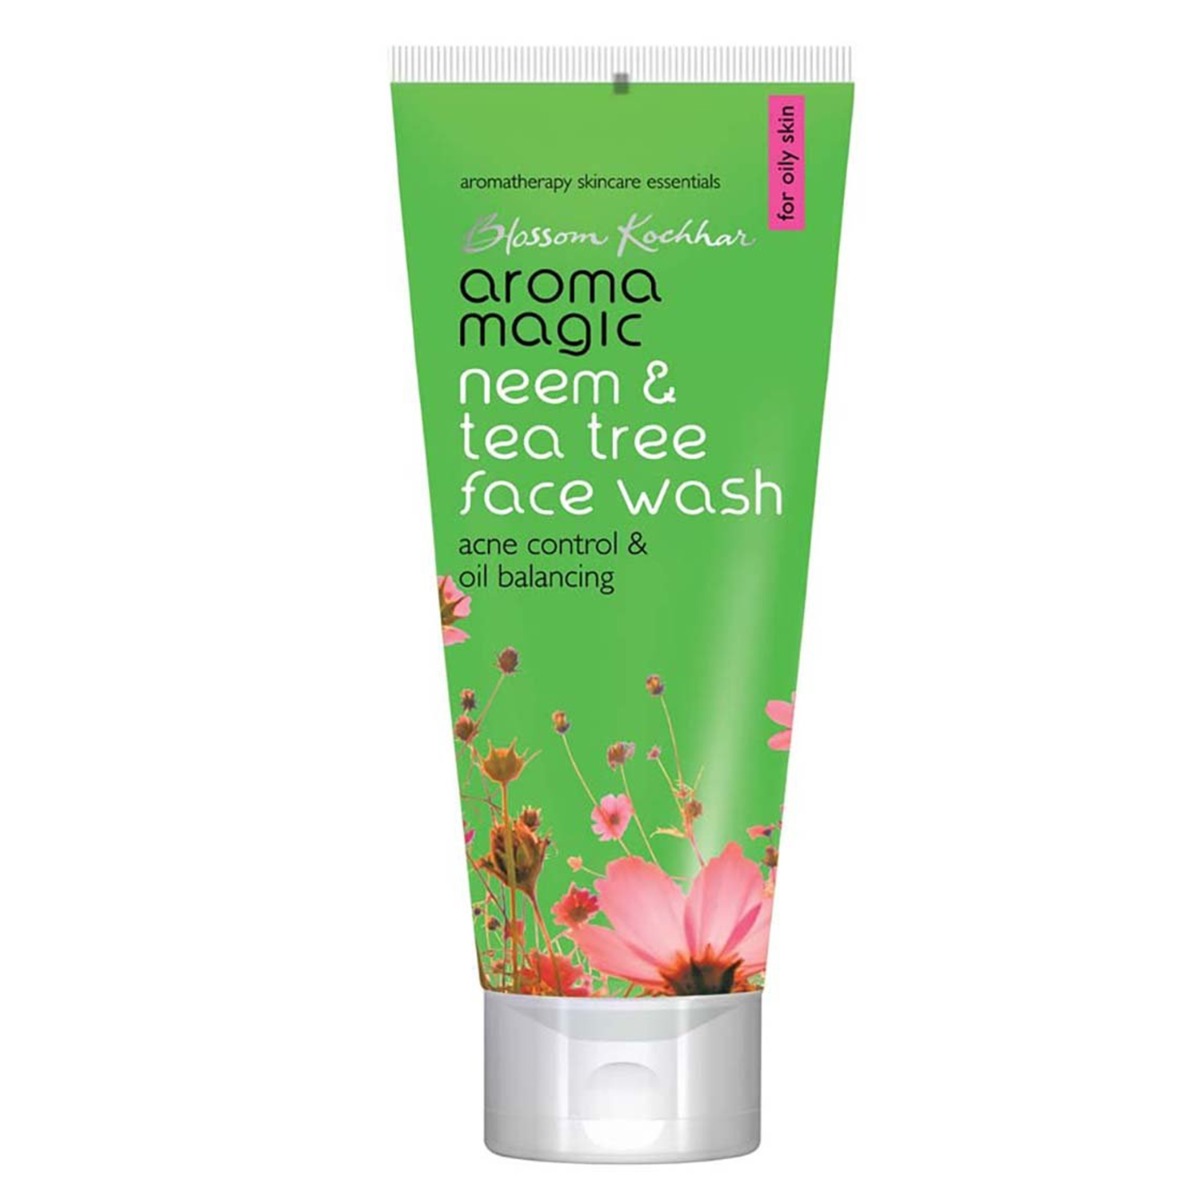 Aroma Magic Neem & Tea Tree Face Wash, 100ml